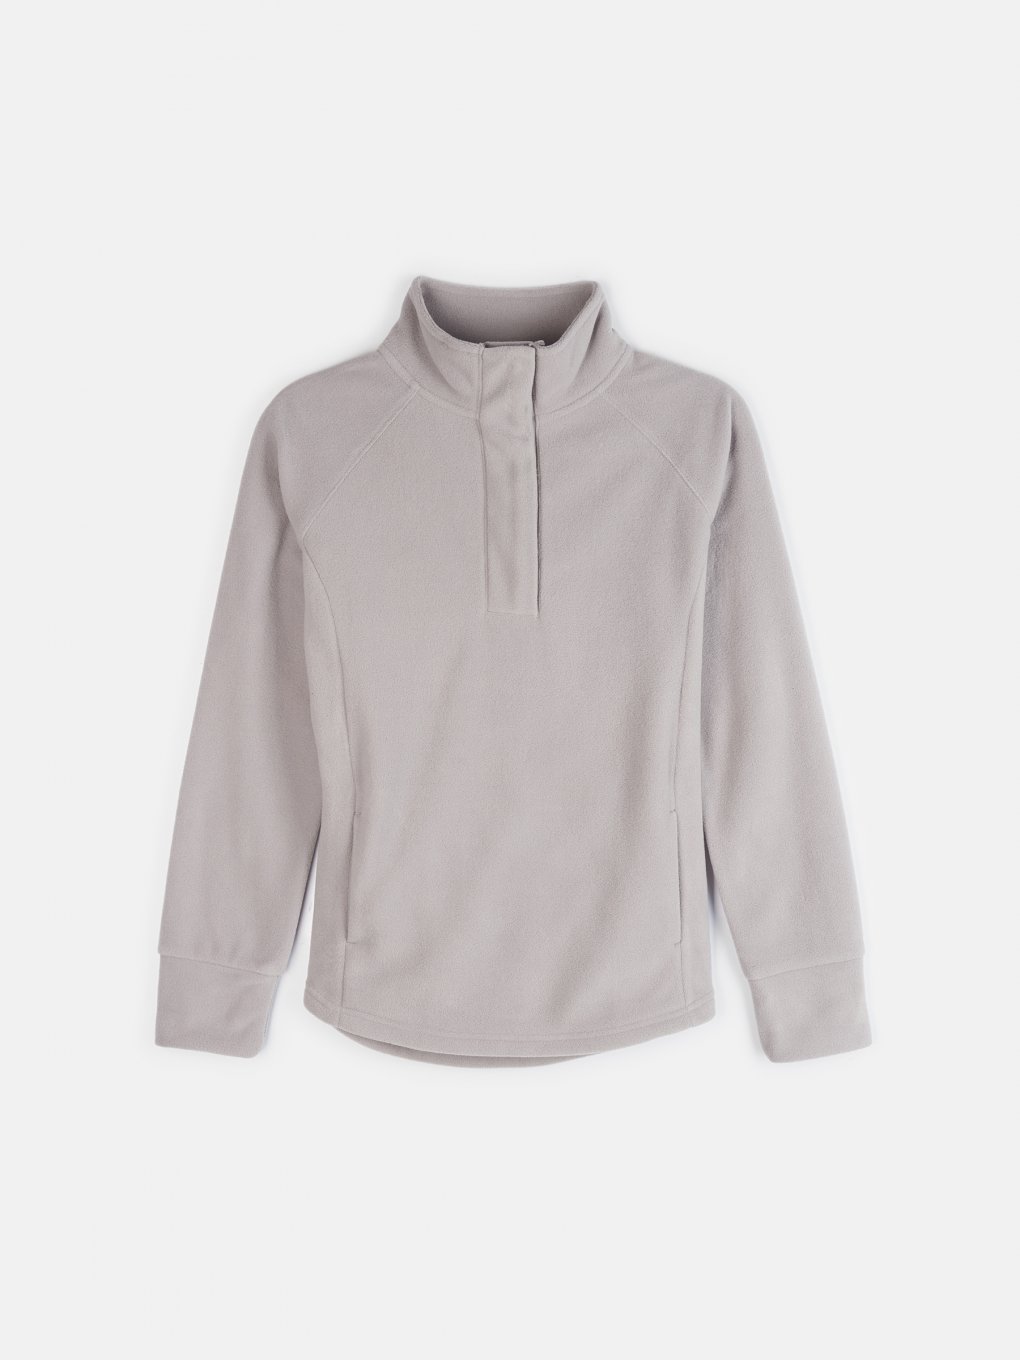 Fleece sweatshirt with zipper